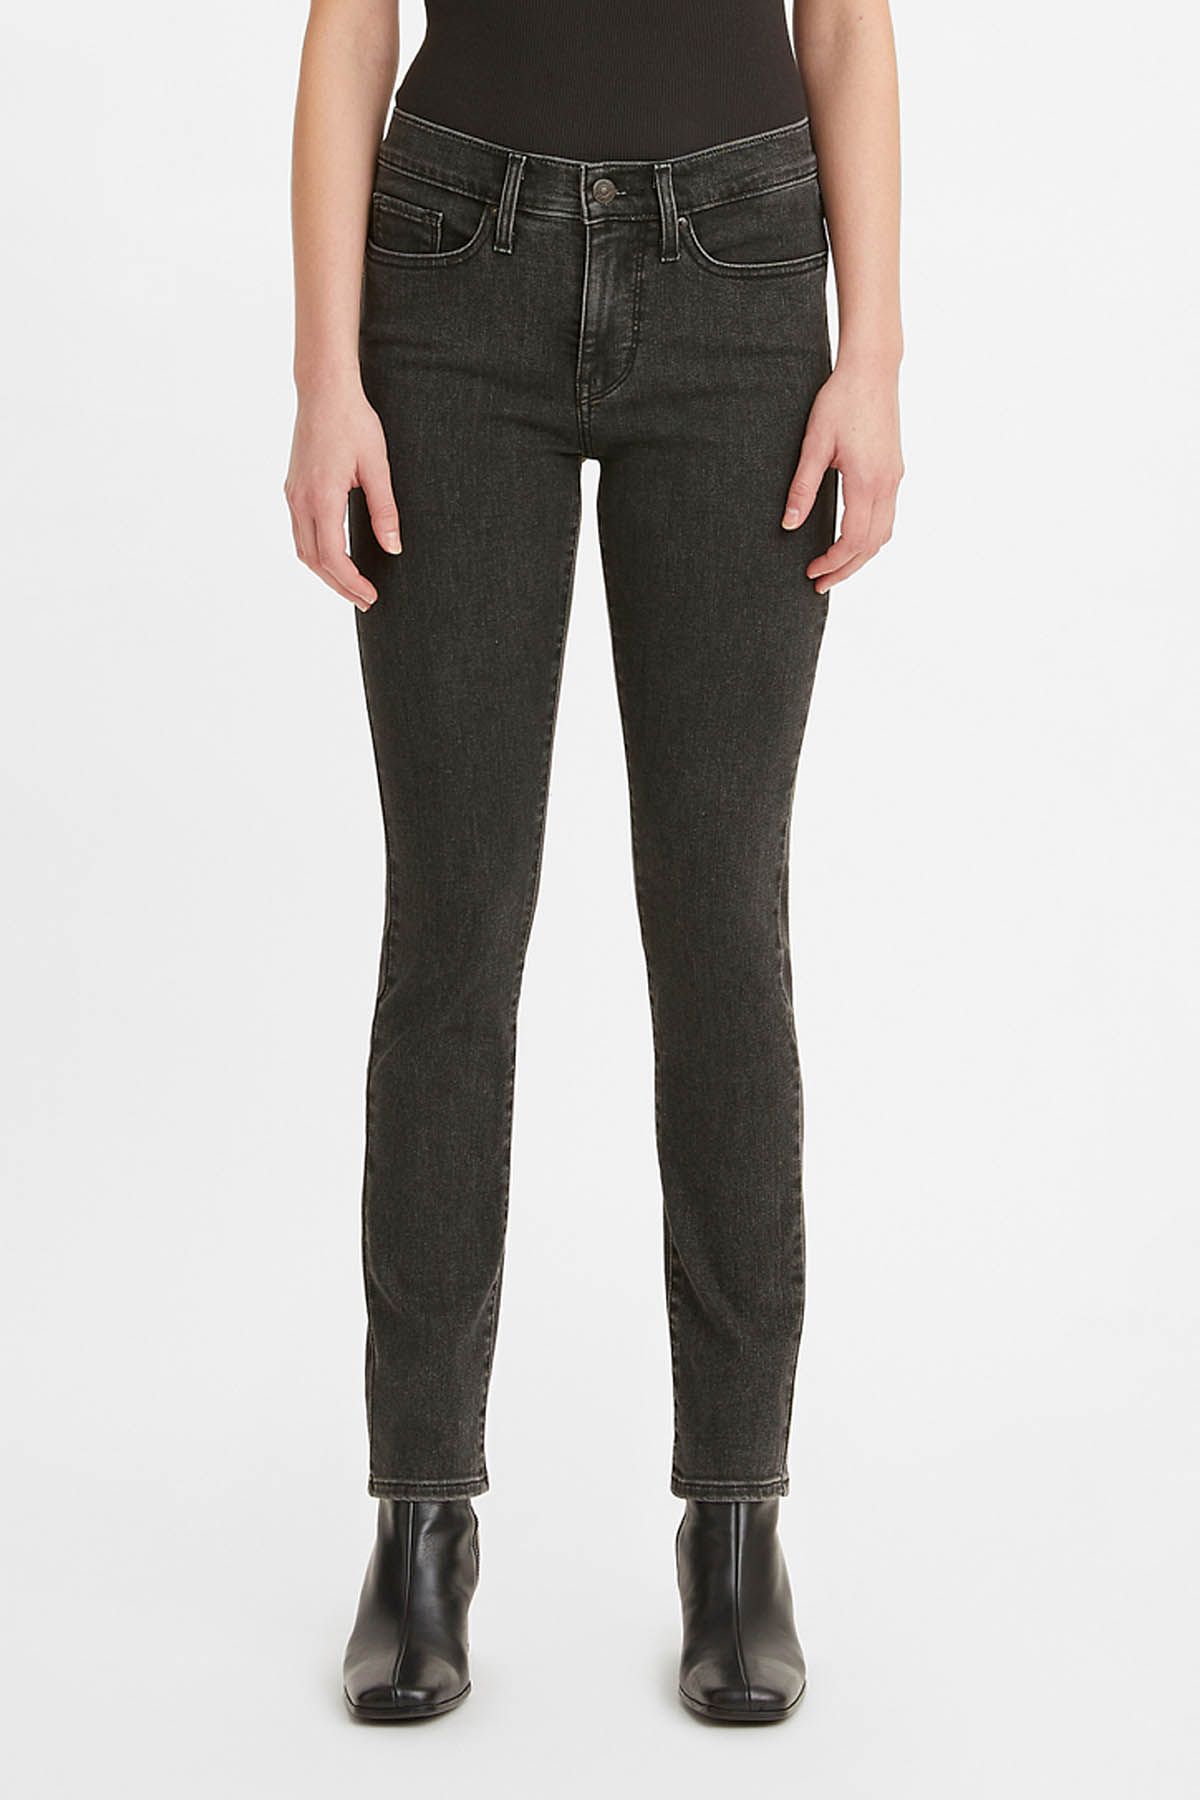 Levi's Â® 311 Shaping Skinny Dark Horizon Women Jeans|akgalleria.com